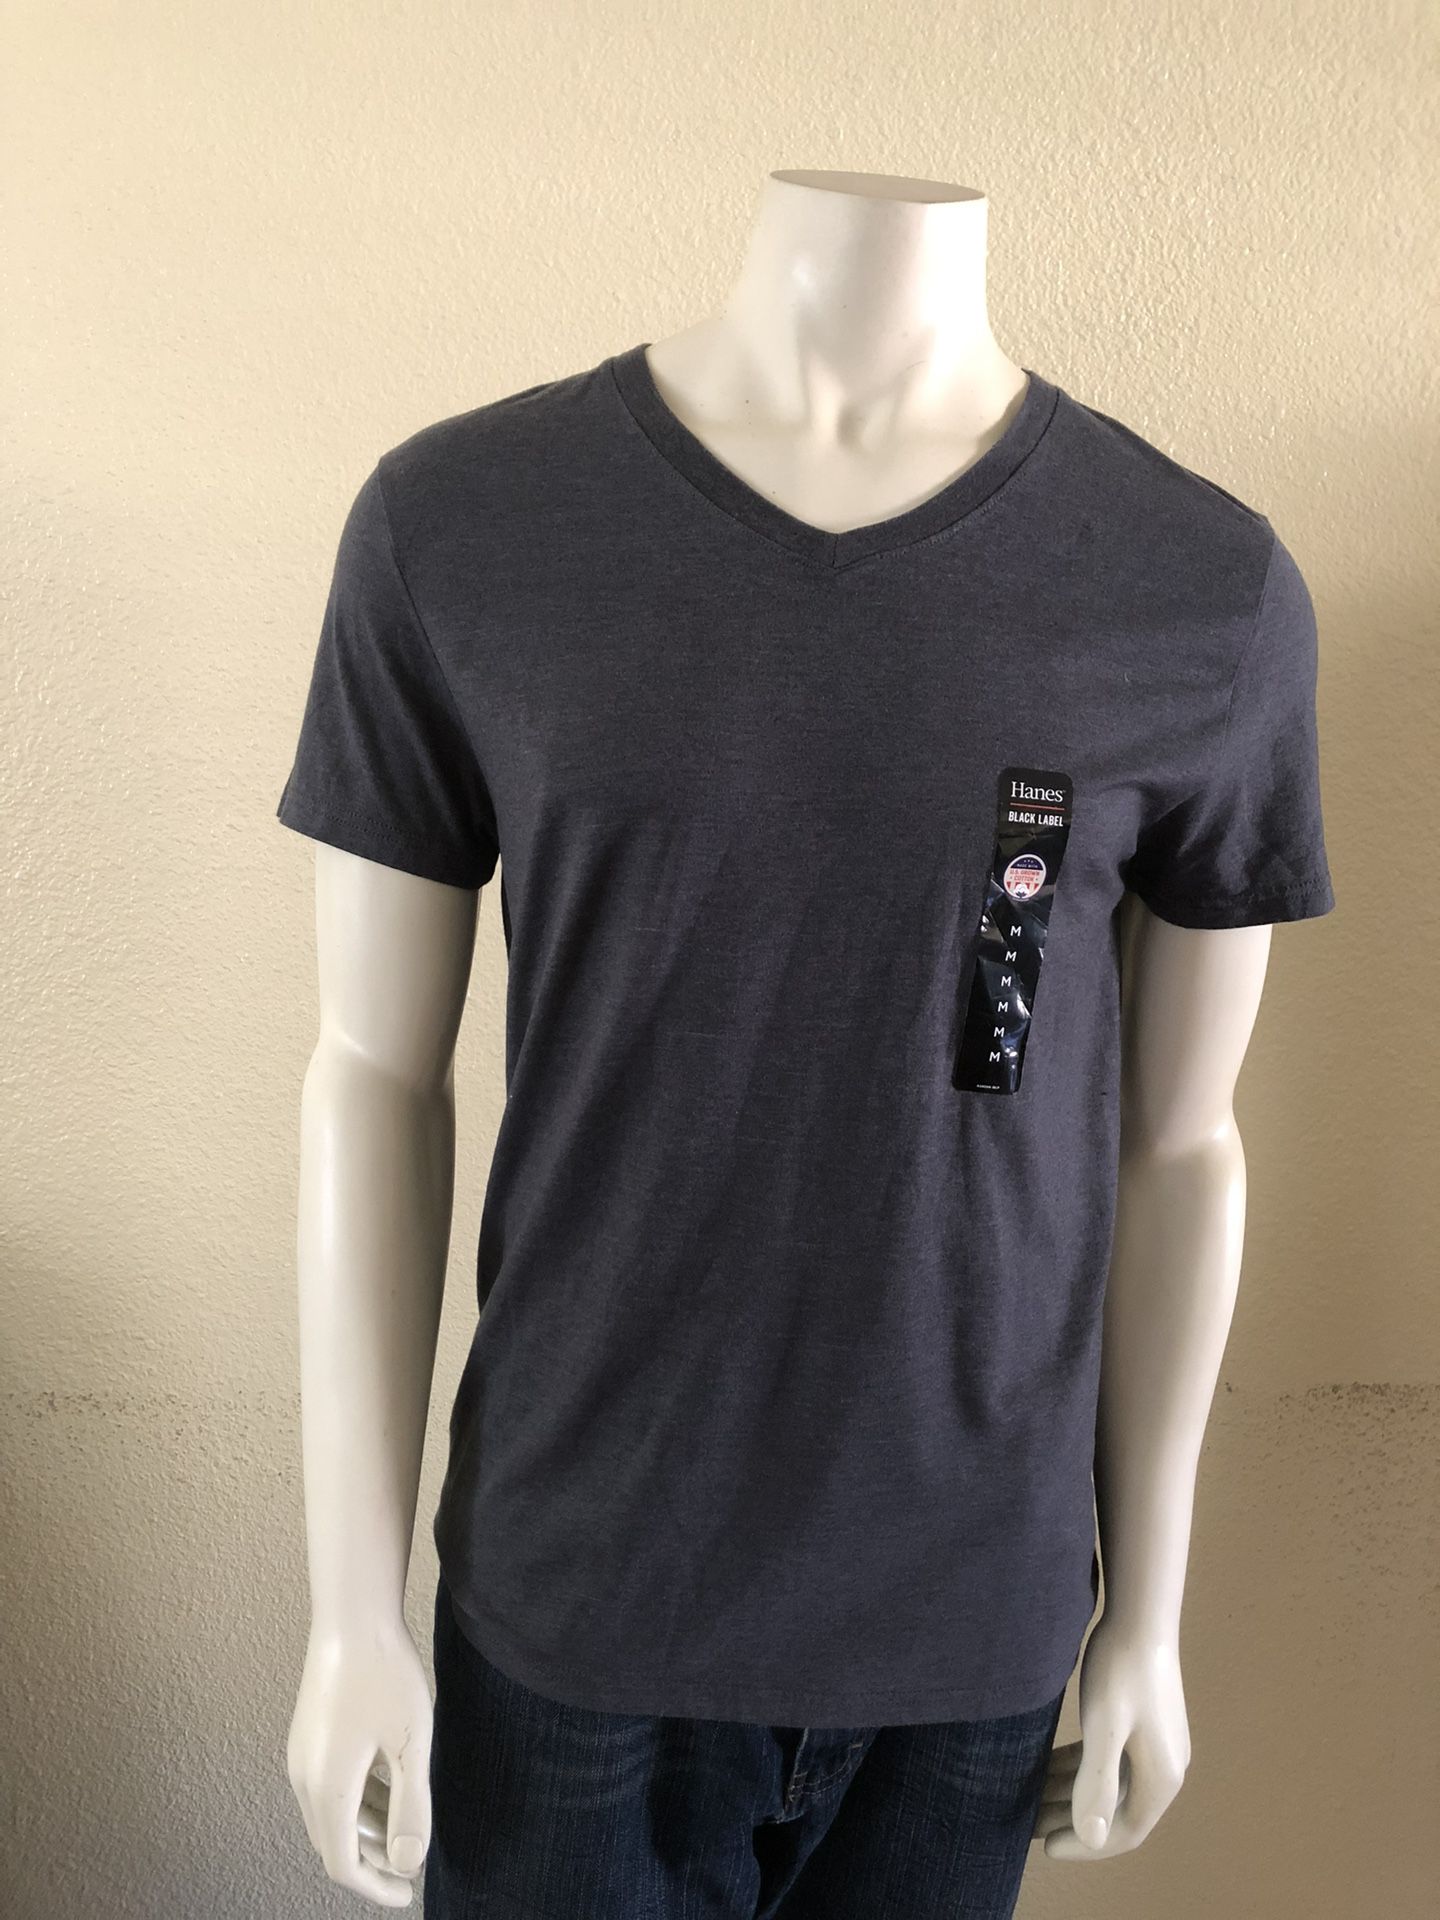 Hanes Men's Short Sleeve V-Neck  Black Label T-shirt Size M